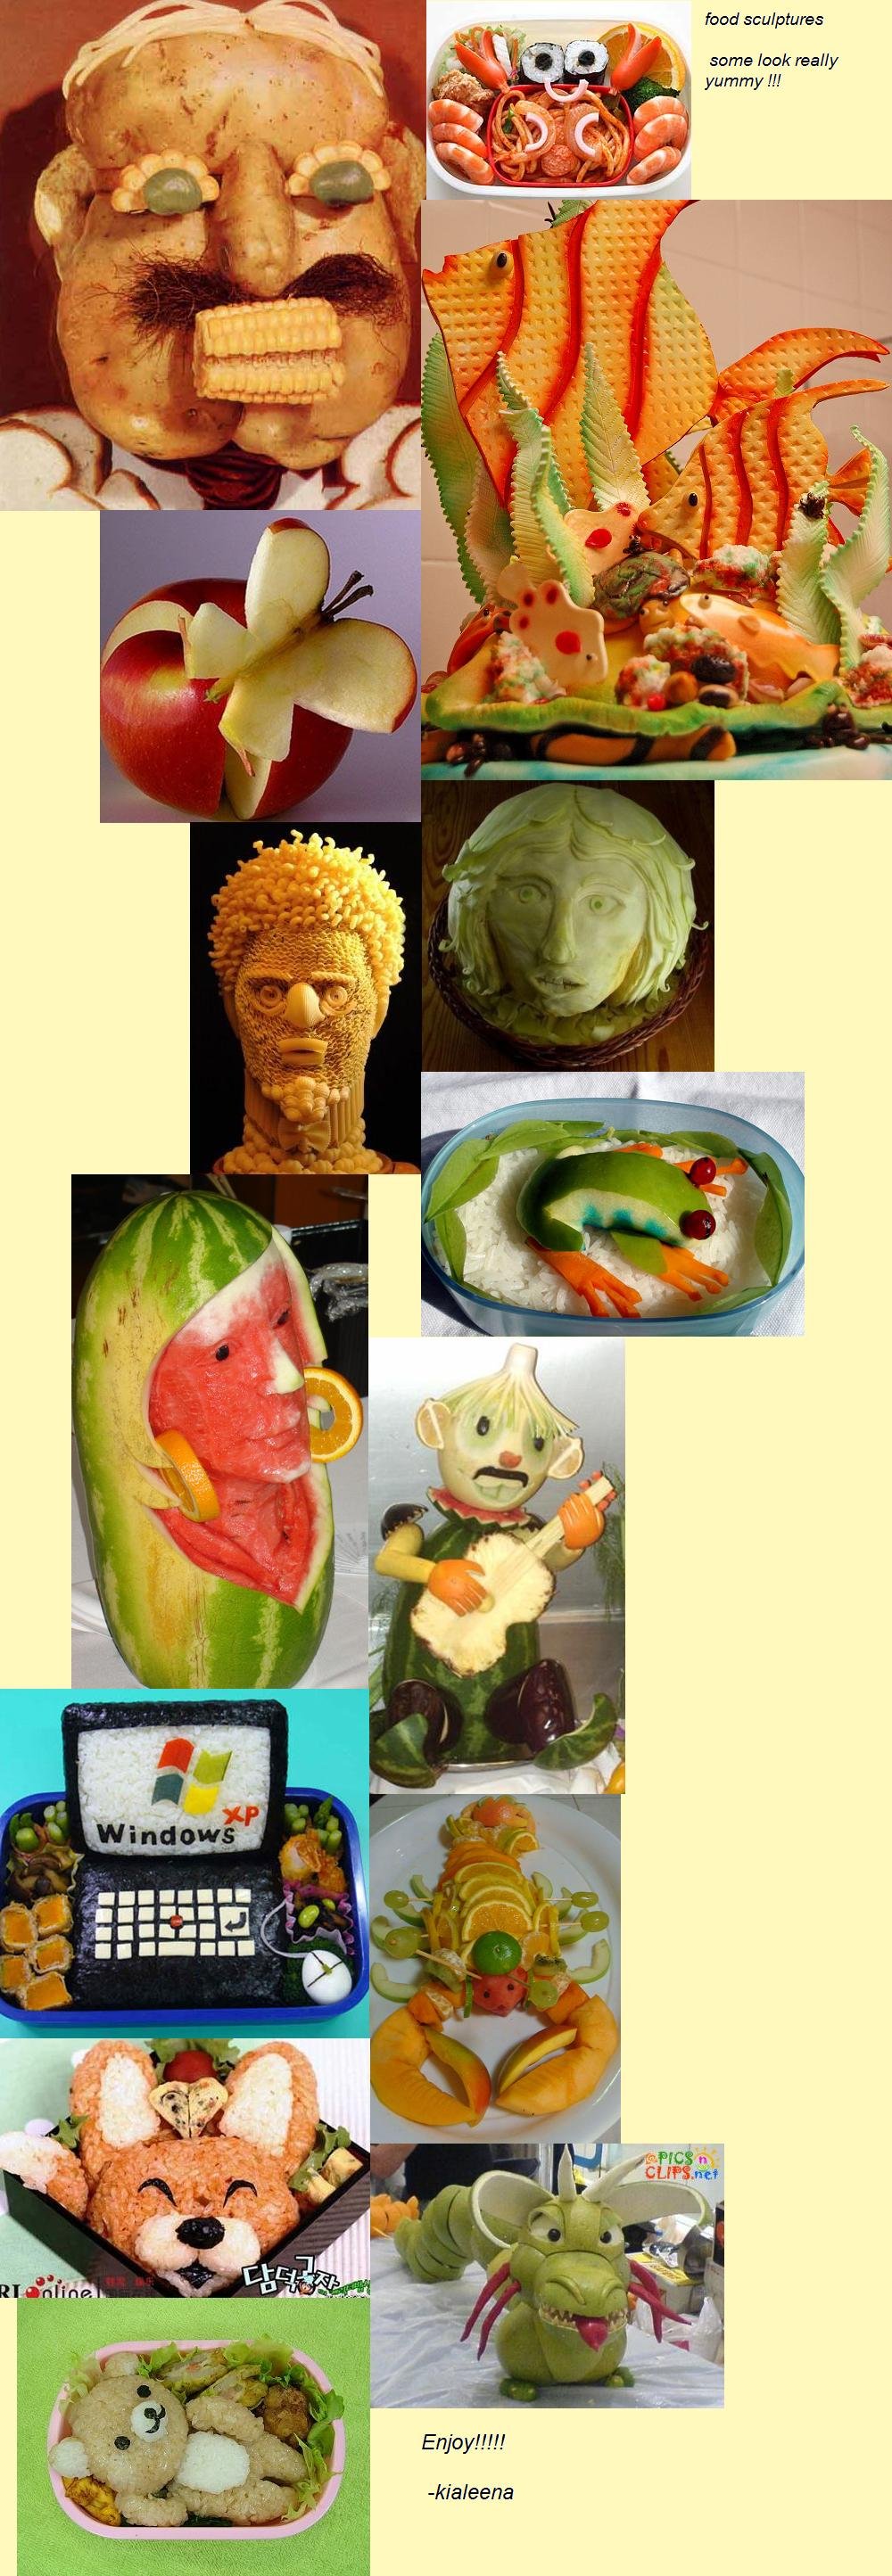 cool food sculptures